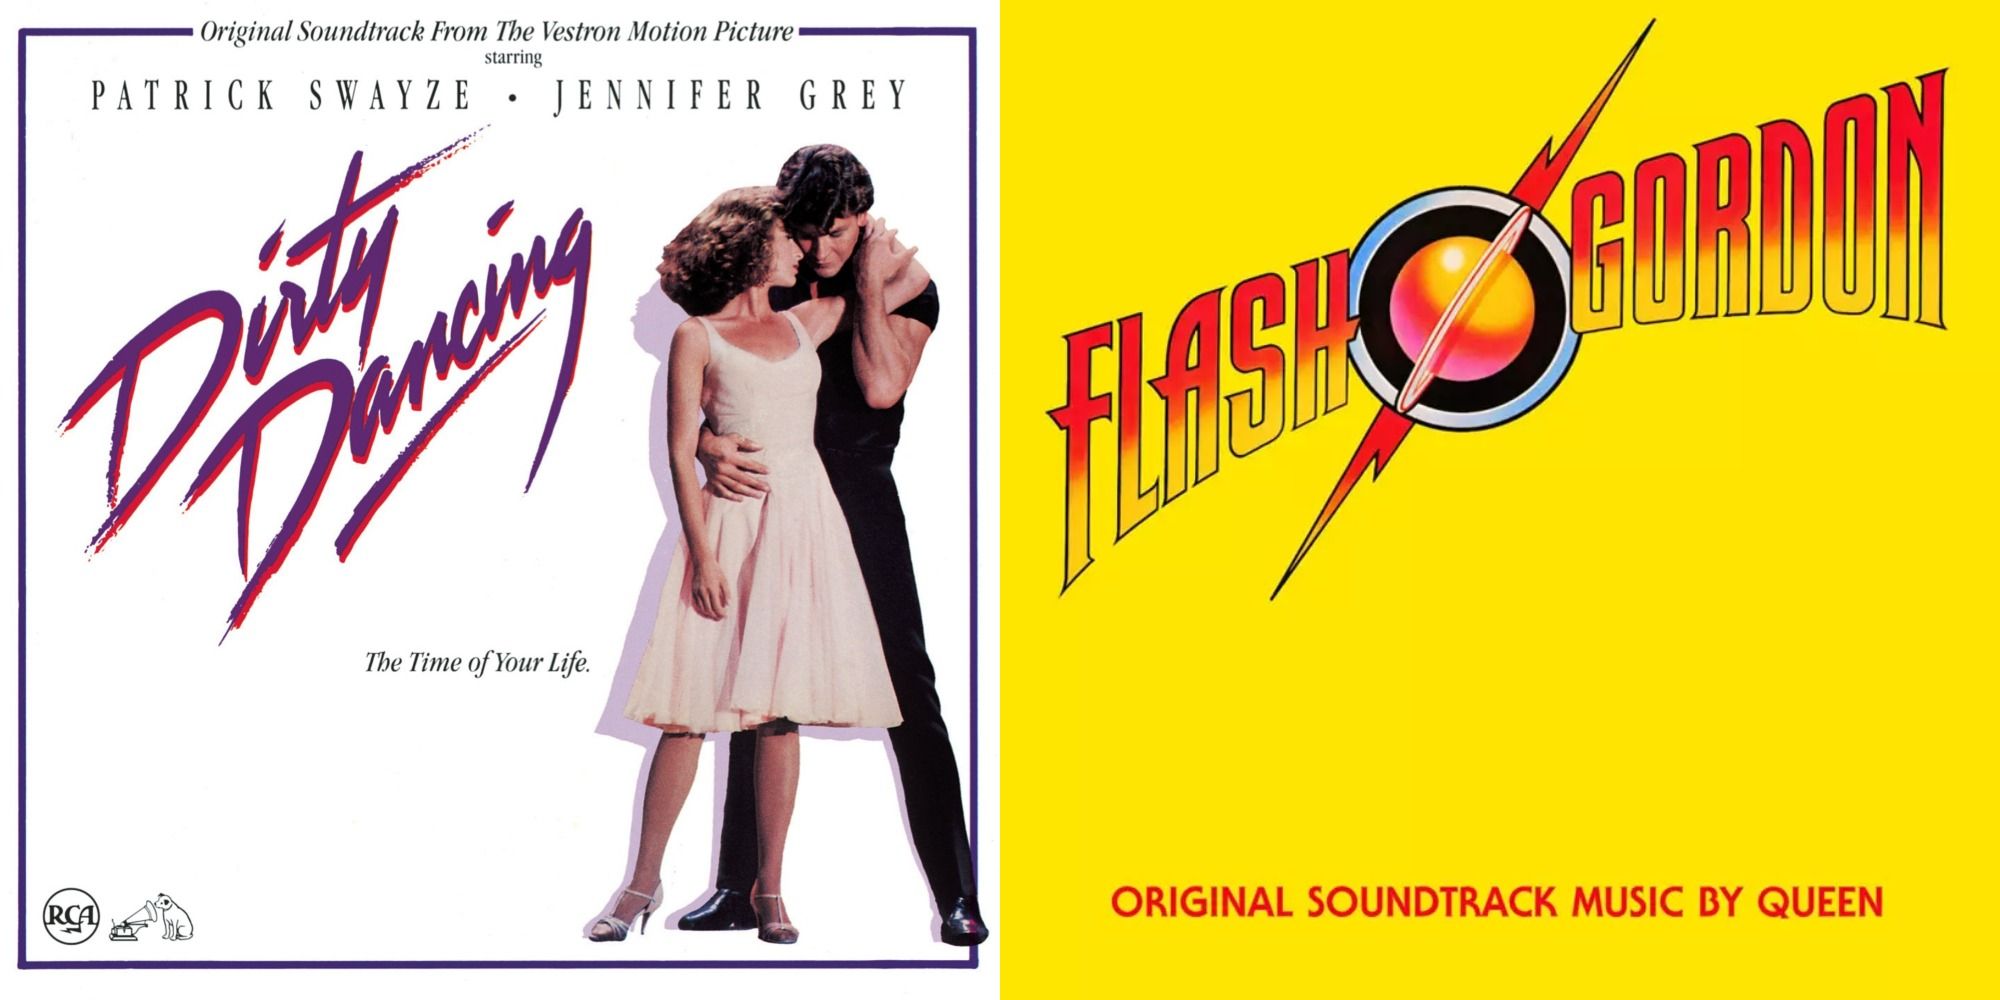 The best '80s movie soundtracks